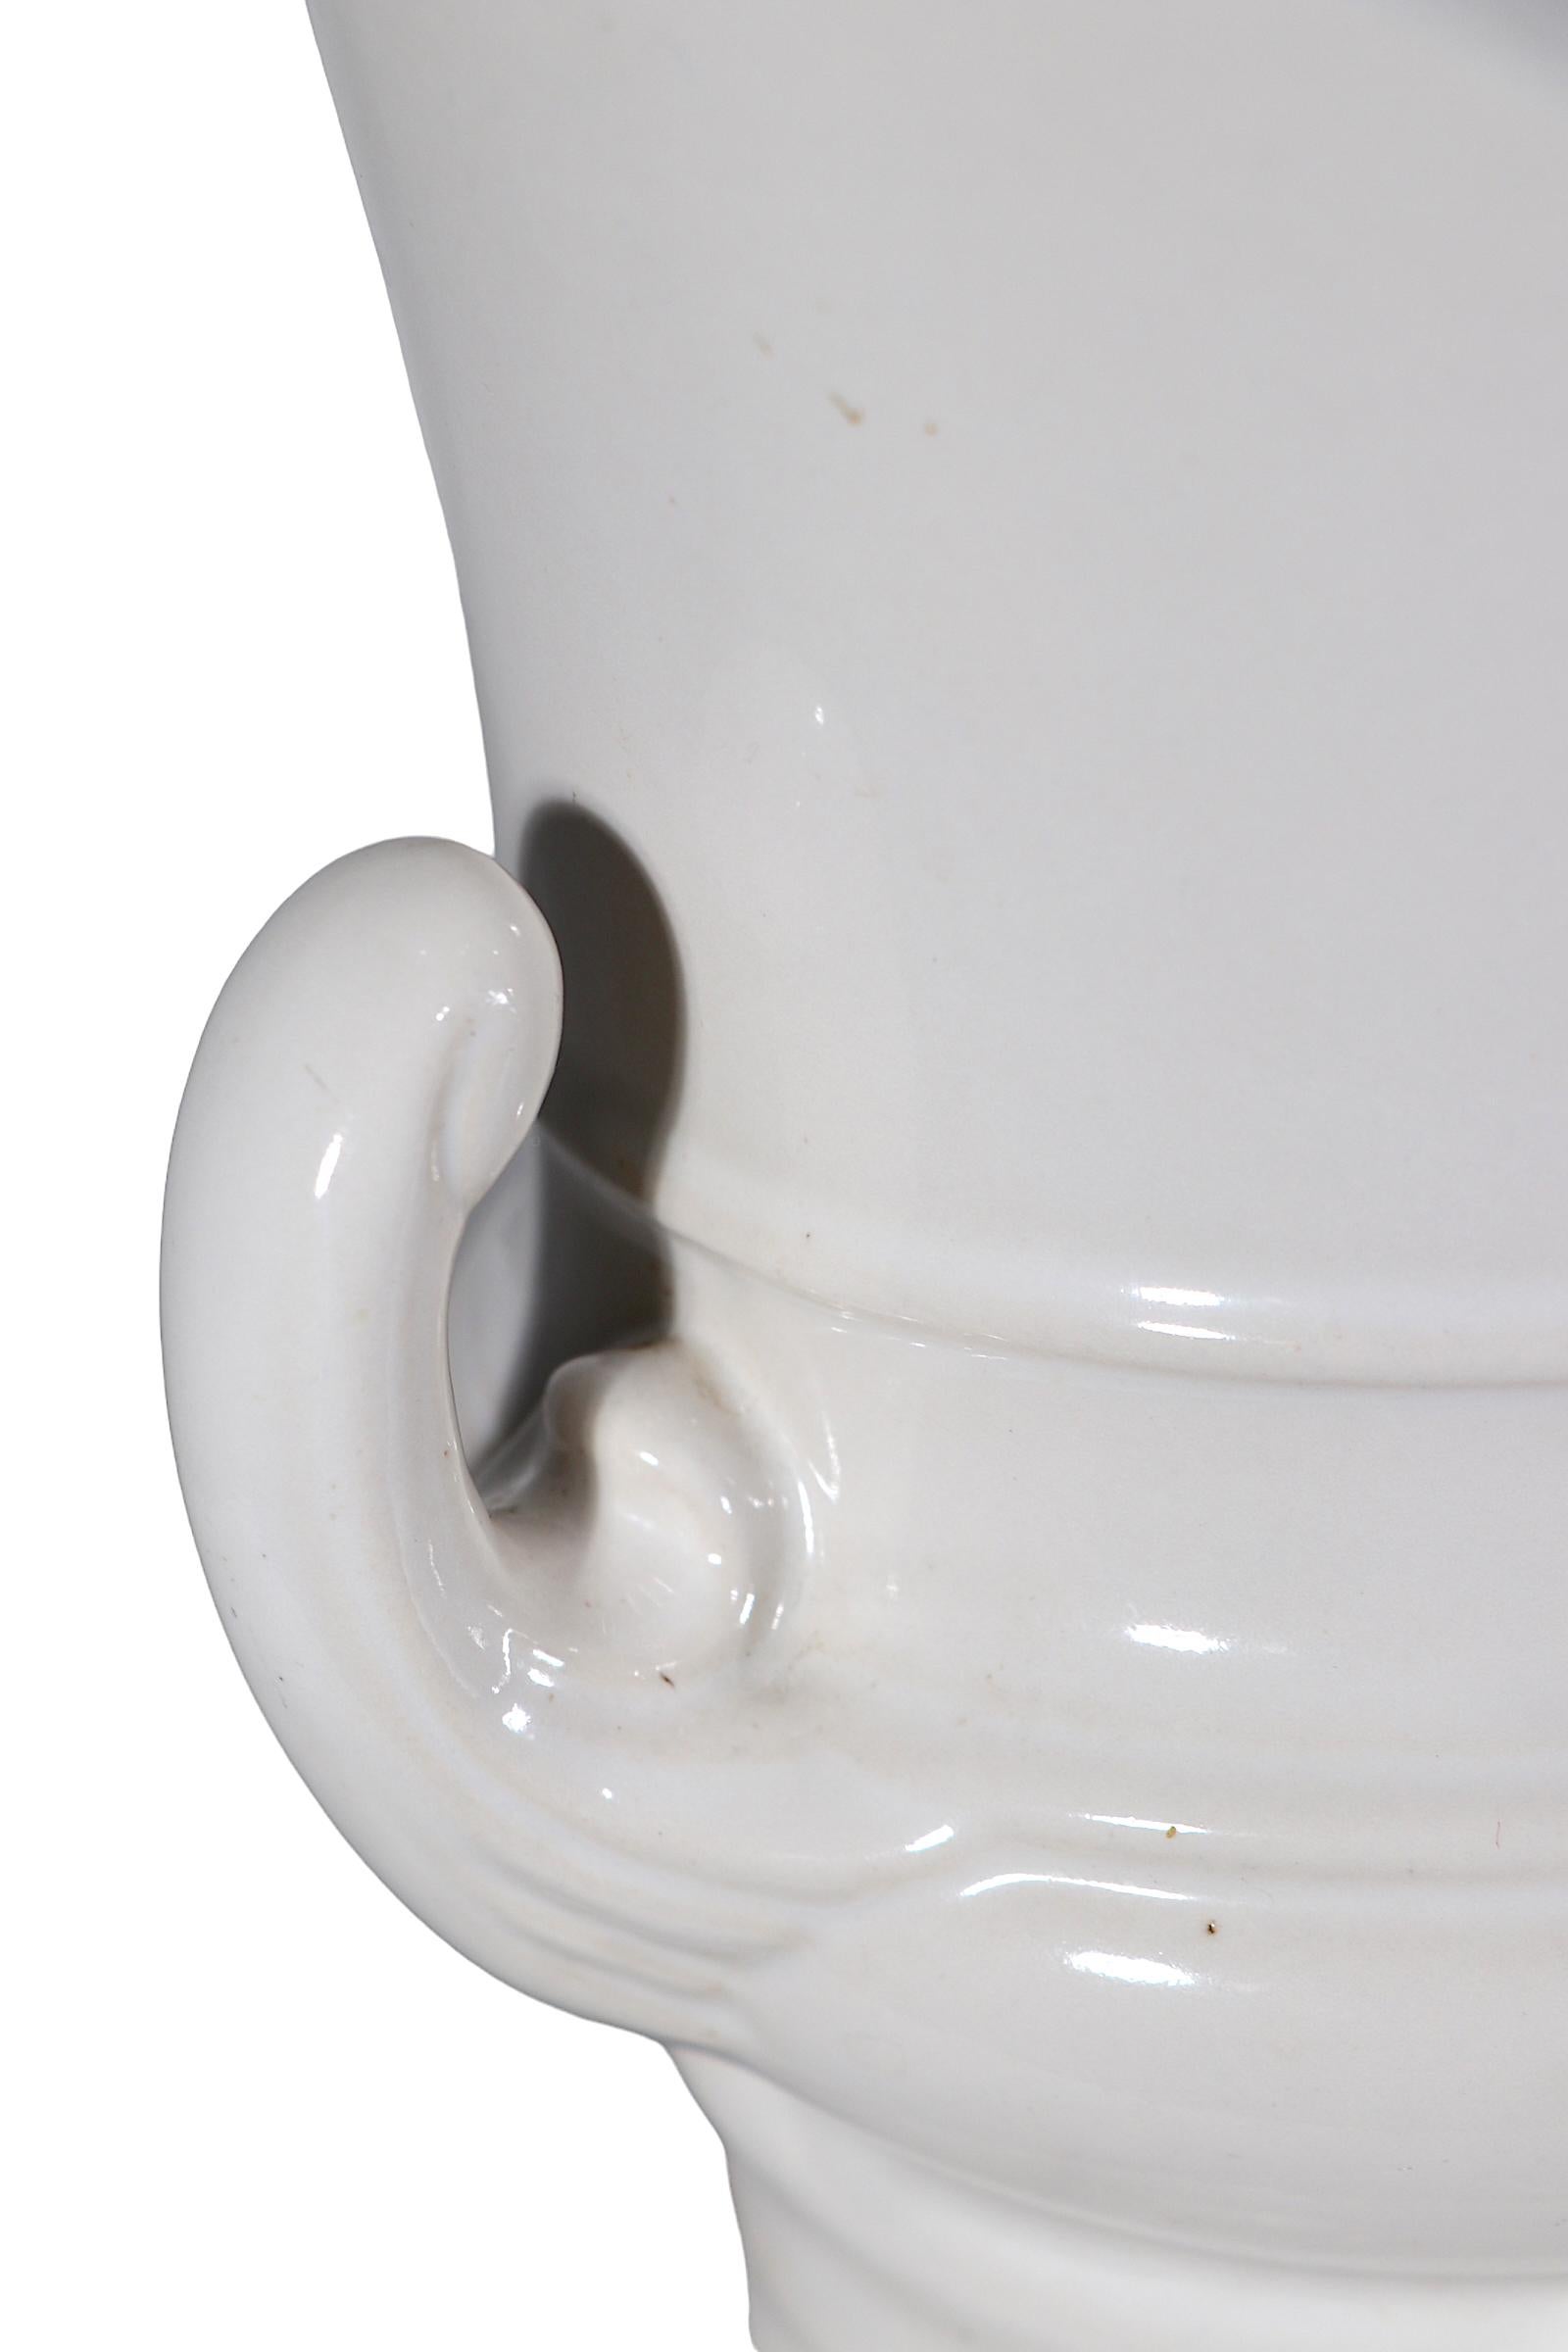 20th Century Pr. White on White Ceramic Urn Campagna  Form Vases   For Sale